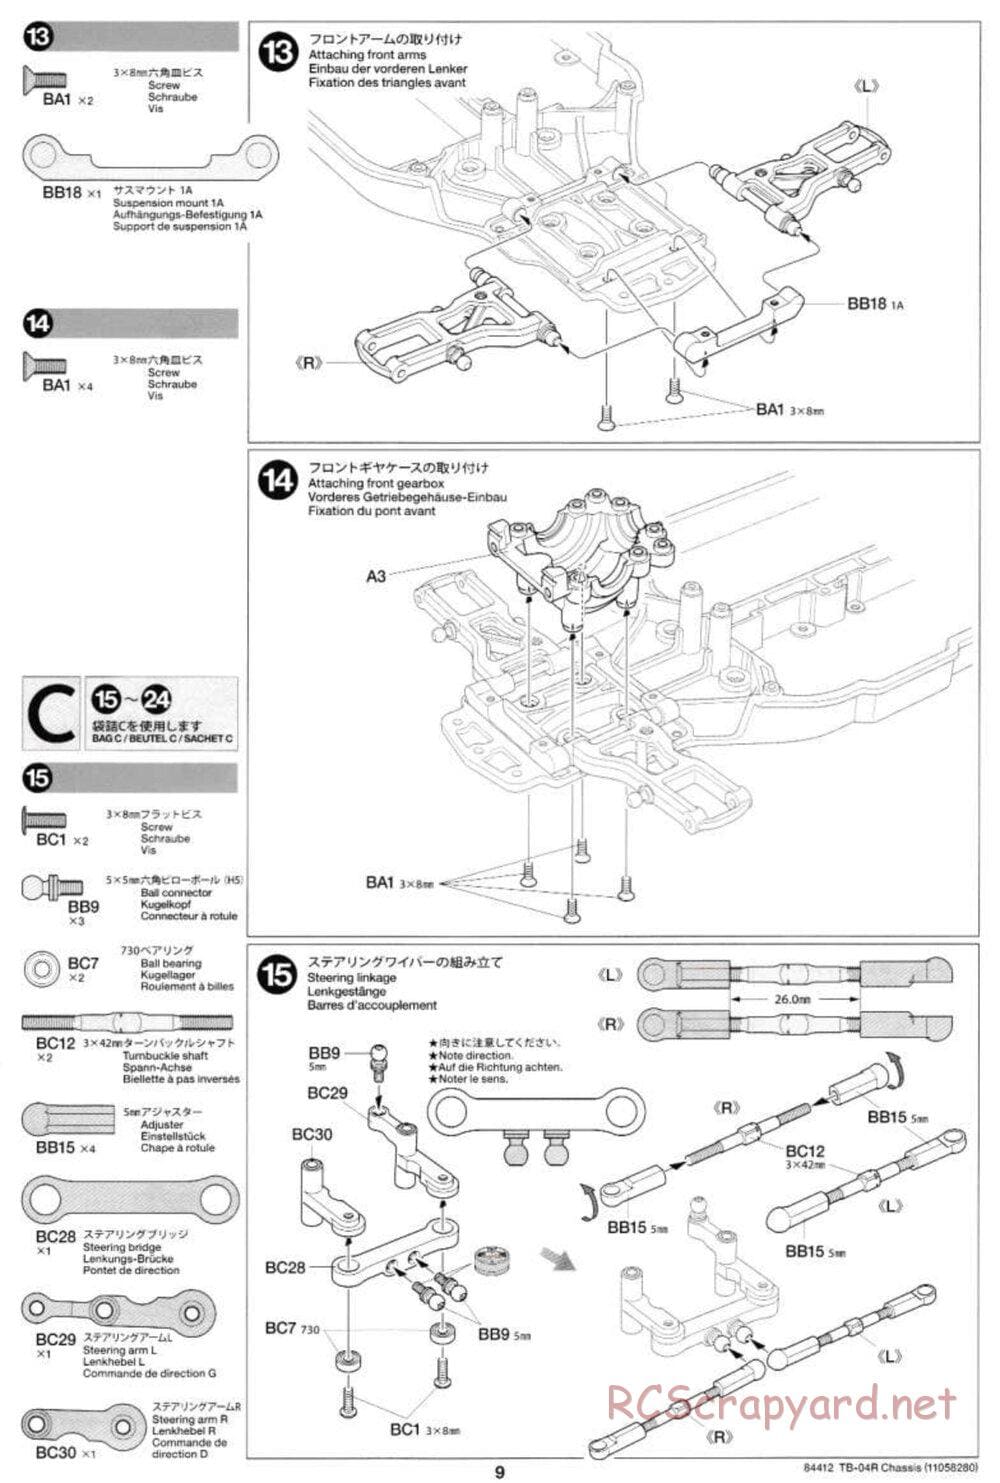 Tamiya - TB-04R Chassis Chassis - Manual - Page 9